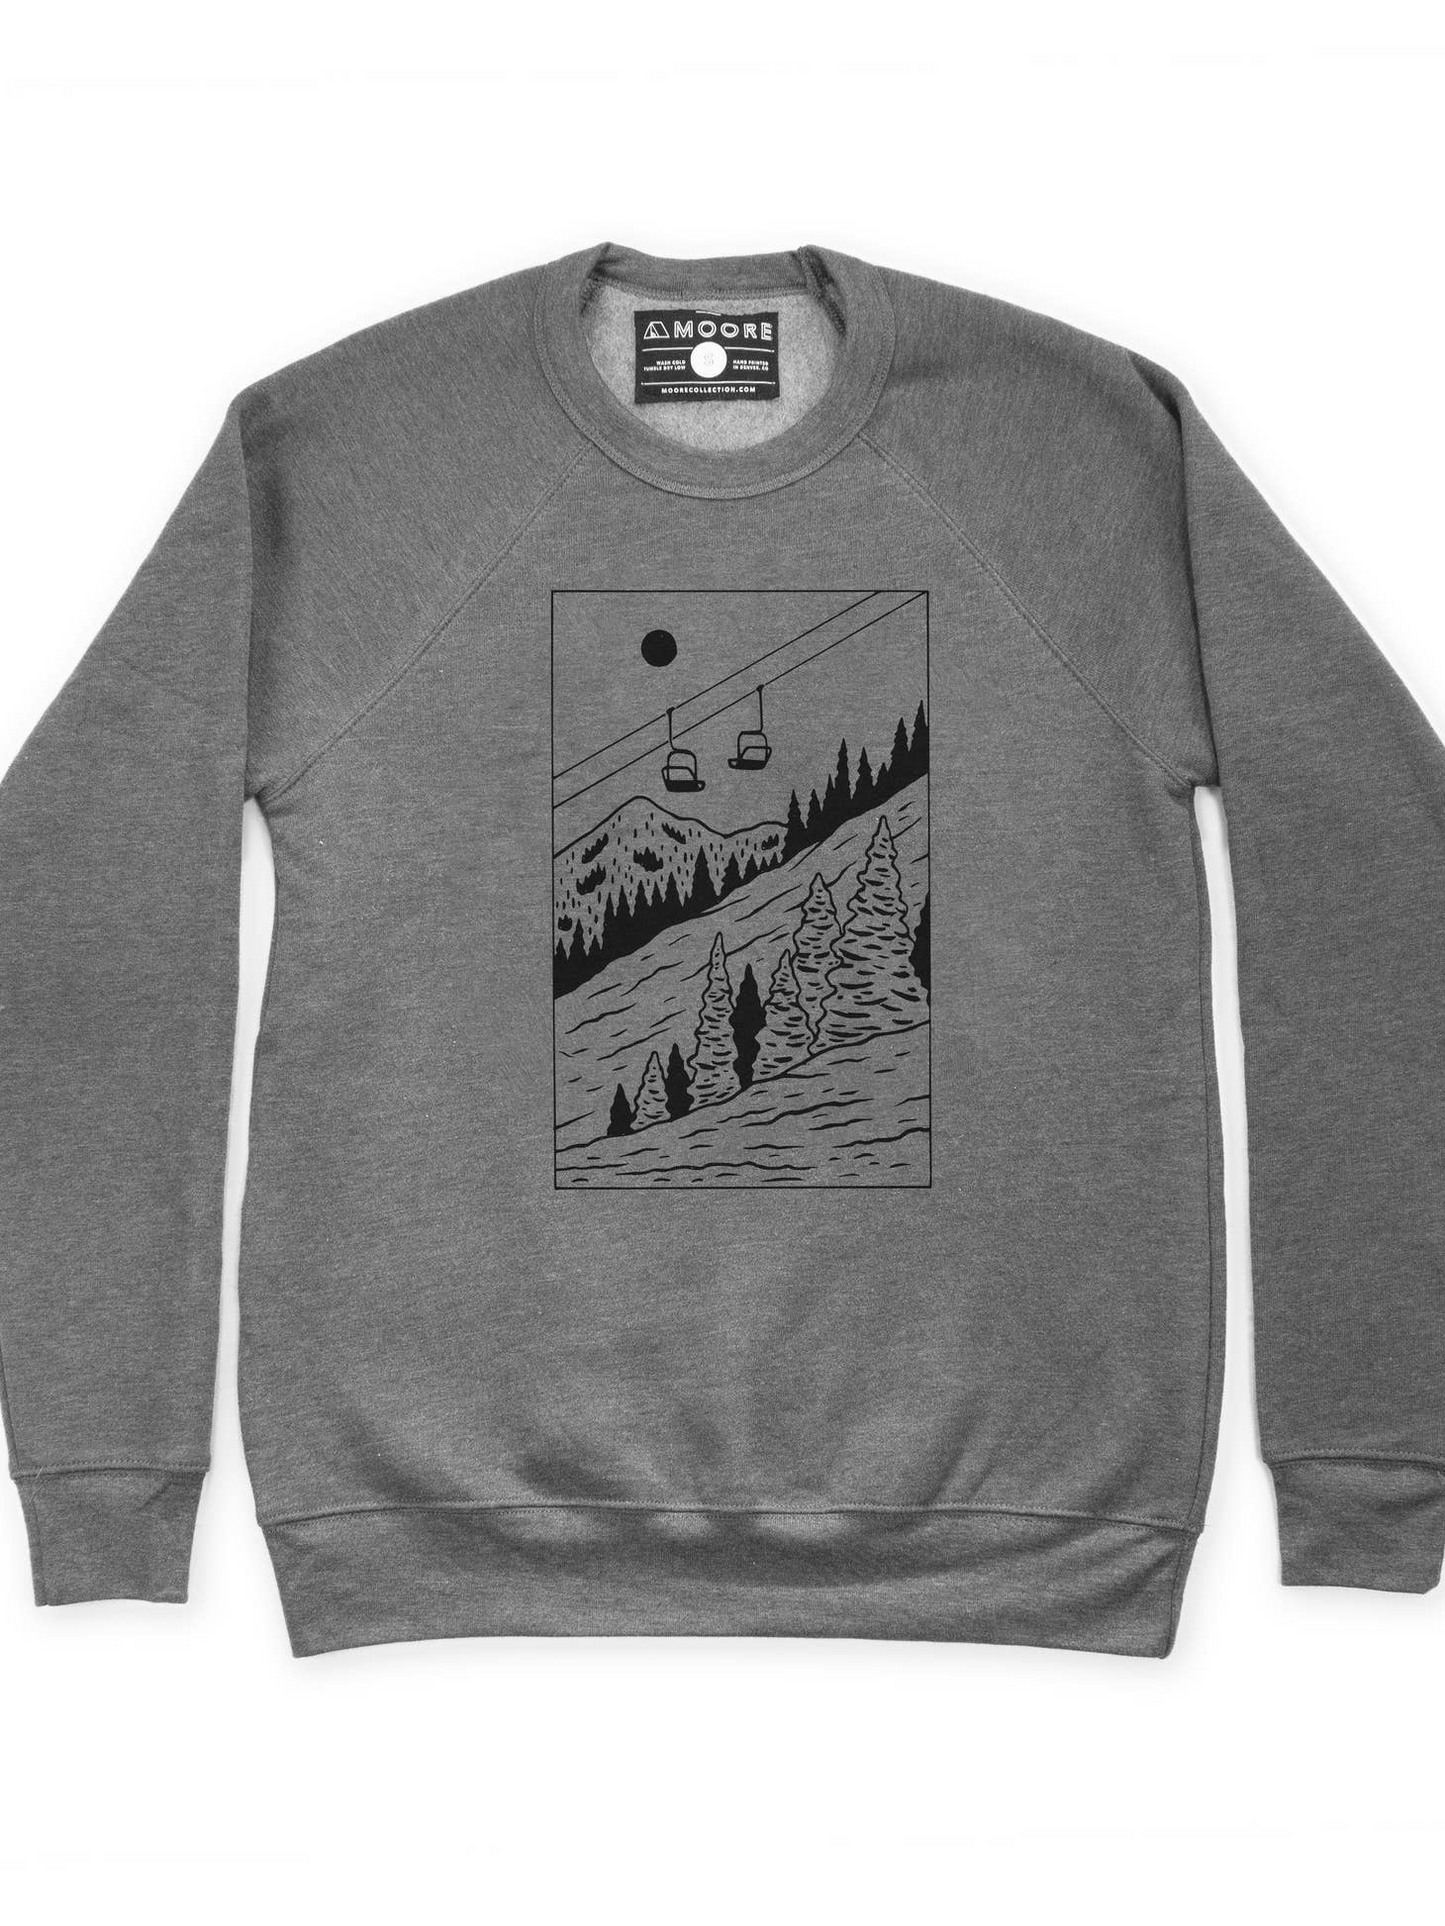 Moore Collection - Slope Crewneck Sweatshirt